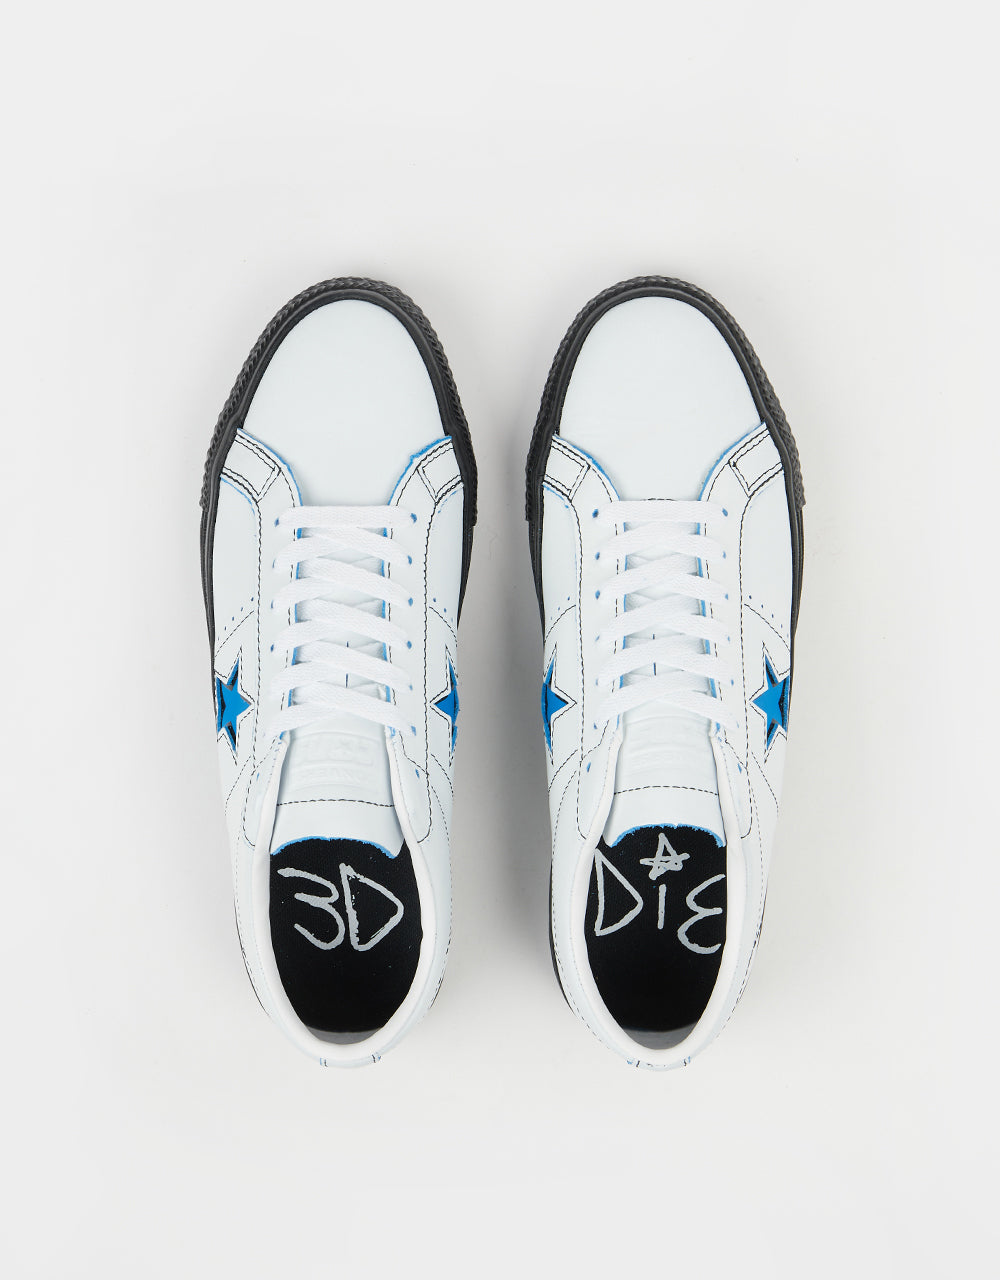 Converse x Eddie Cernicky One Star Pro Ox Skate Shoes - White/Black/Kinetic Blue